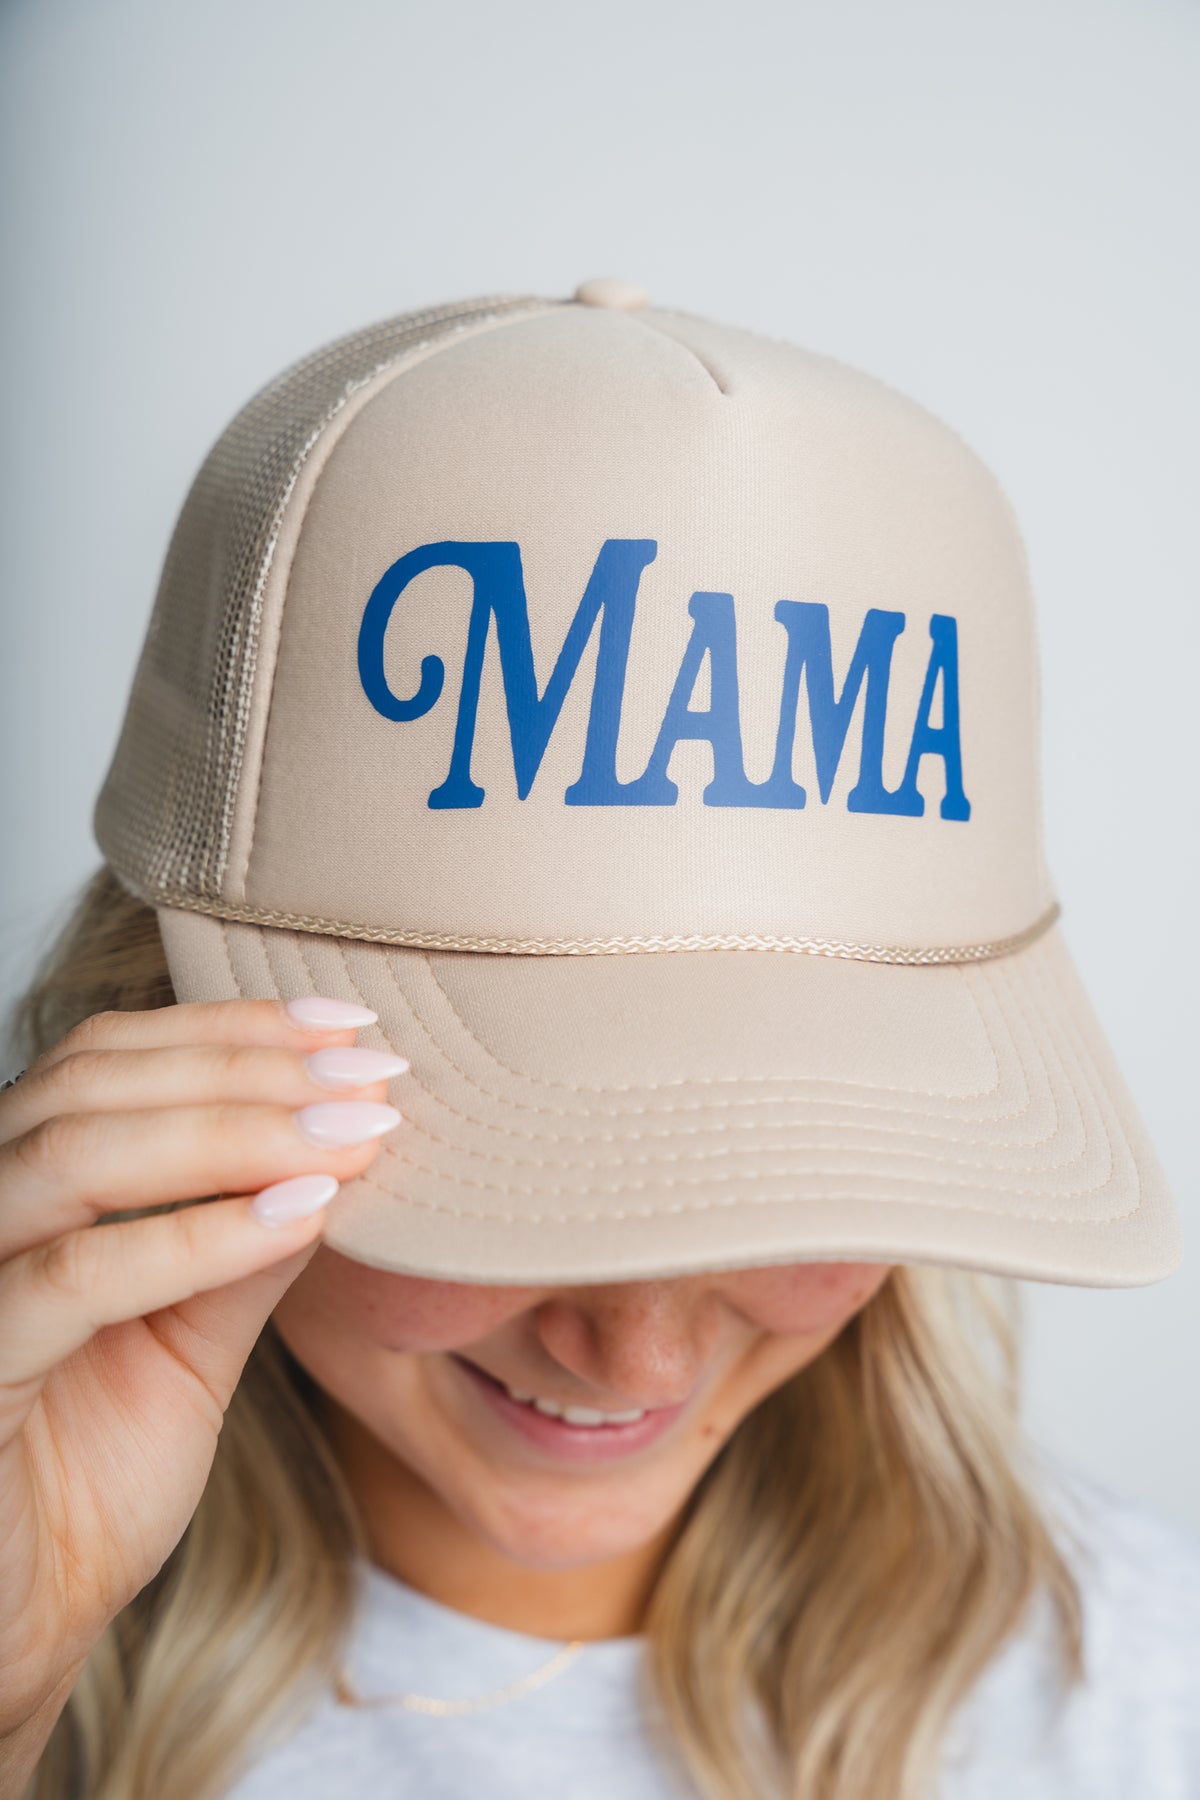 Mama trucker hat khaki - Stylish Hat - Trendy Gifts for Mom at Lush Fashion Lounge in Oklahoma